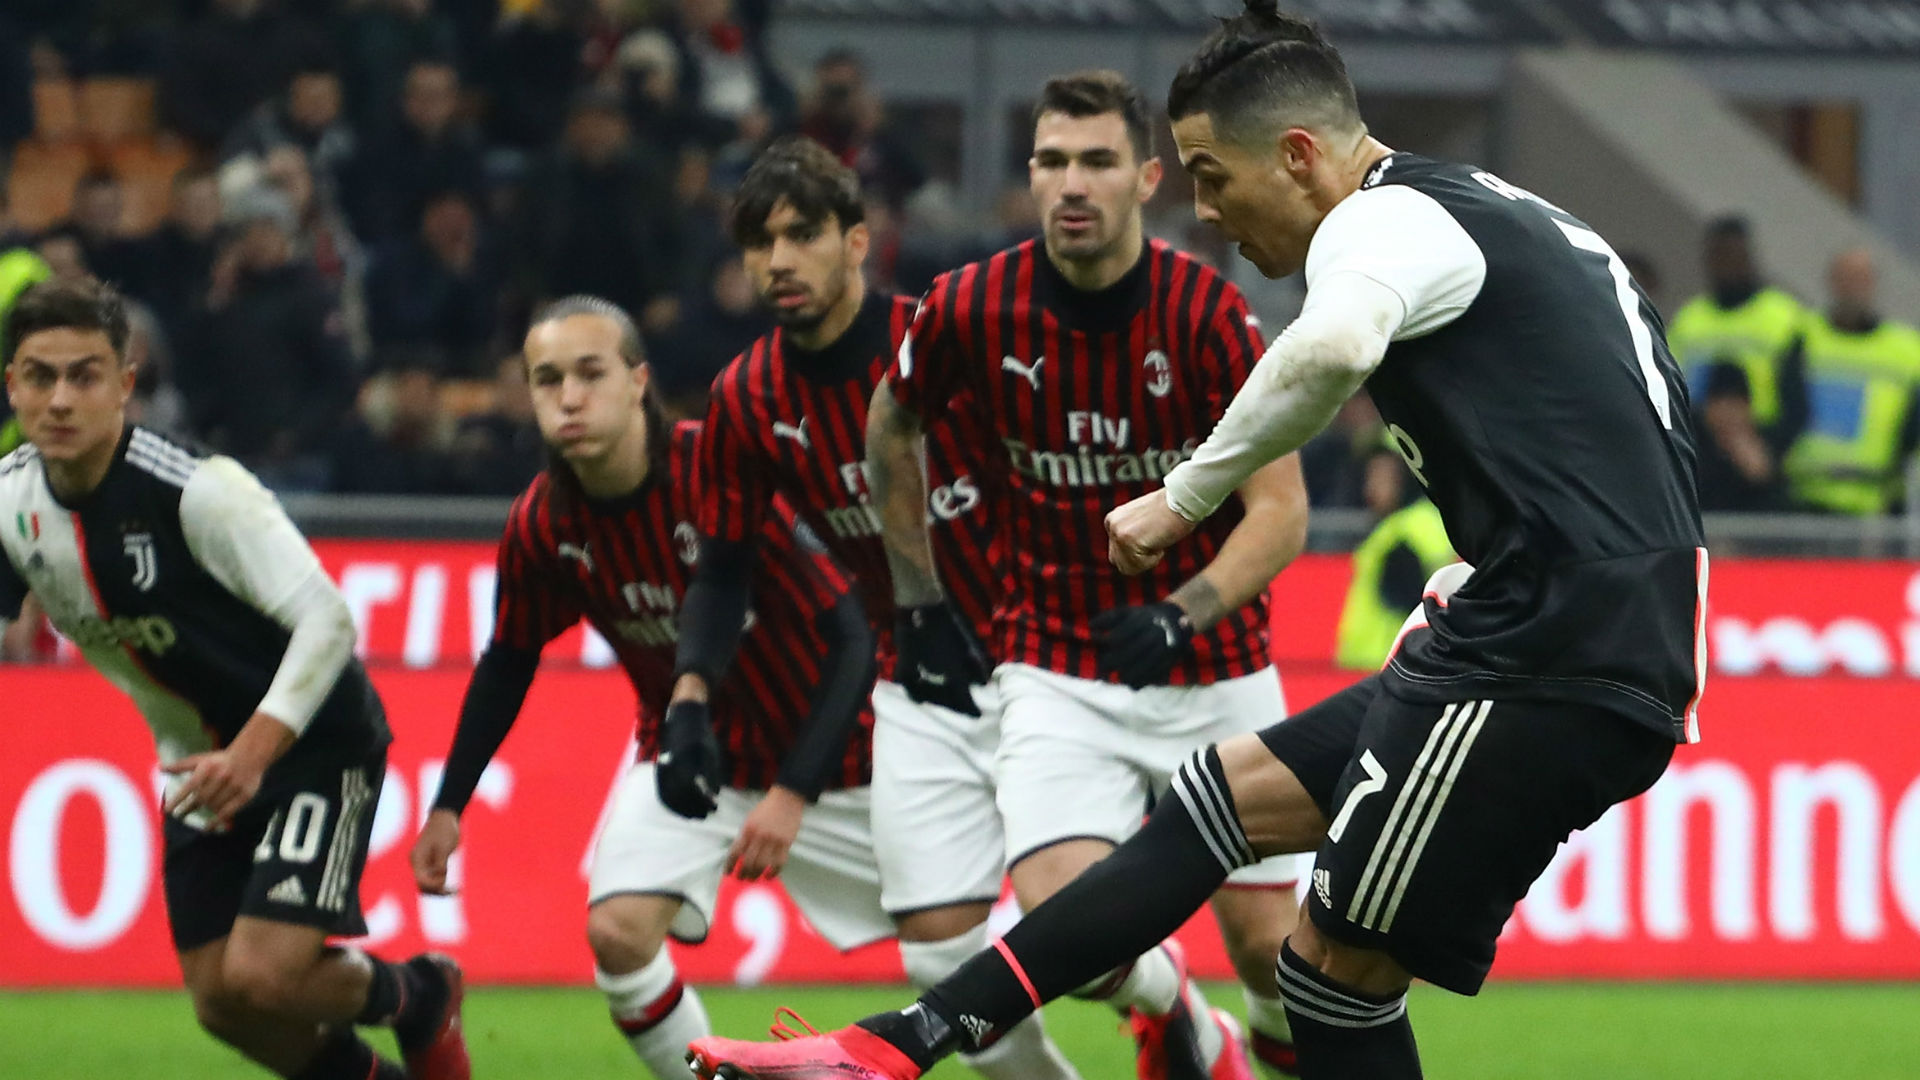 Coppa Italia semi-final between Juventus and Milan postponed due to coronavirus fears